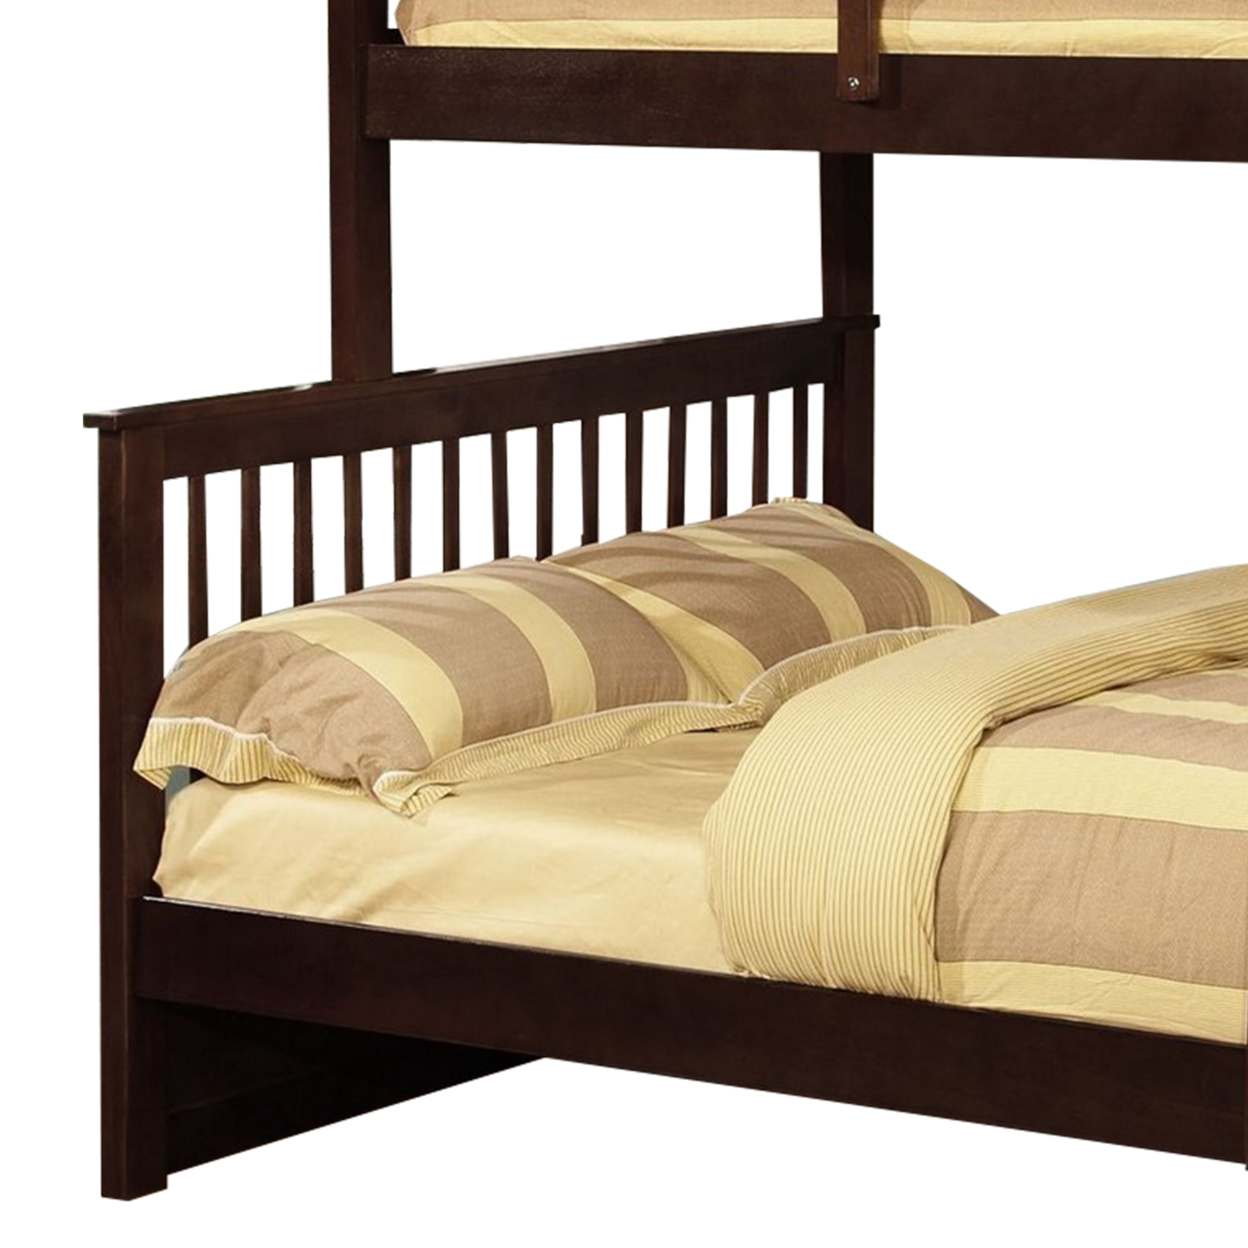 Wooden Twin Over Full Bunk Bed With Slatted Headboard, Dark Brown- Saltoro Sherpi